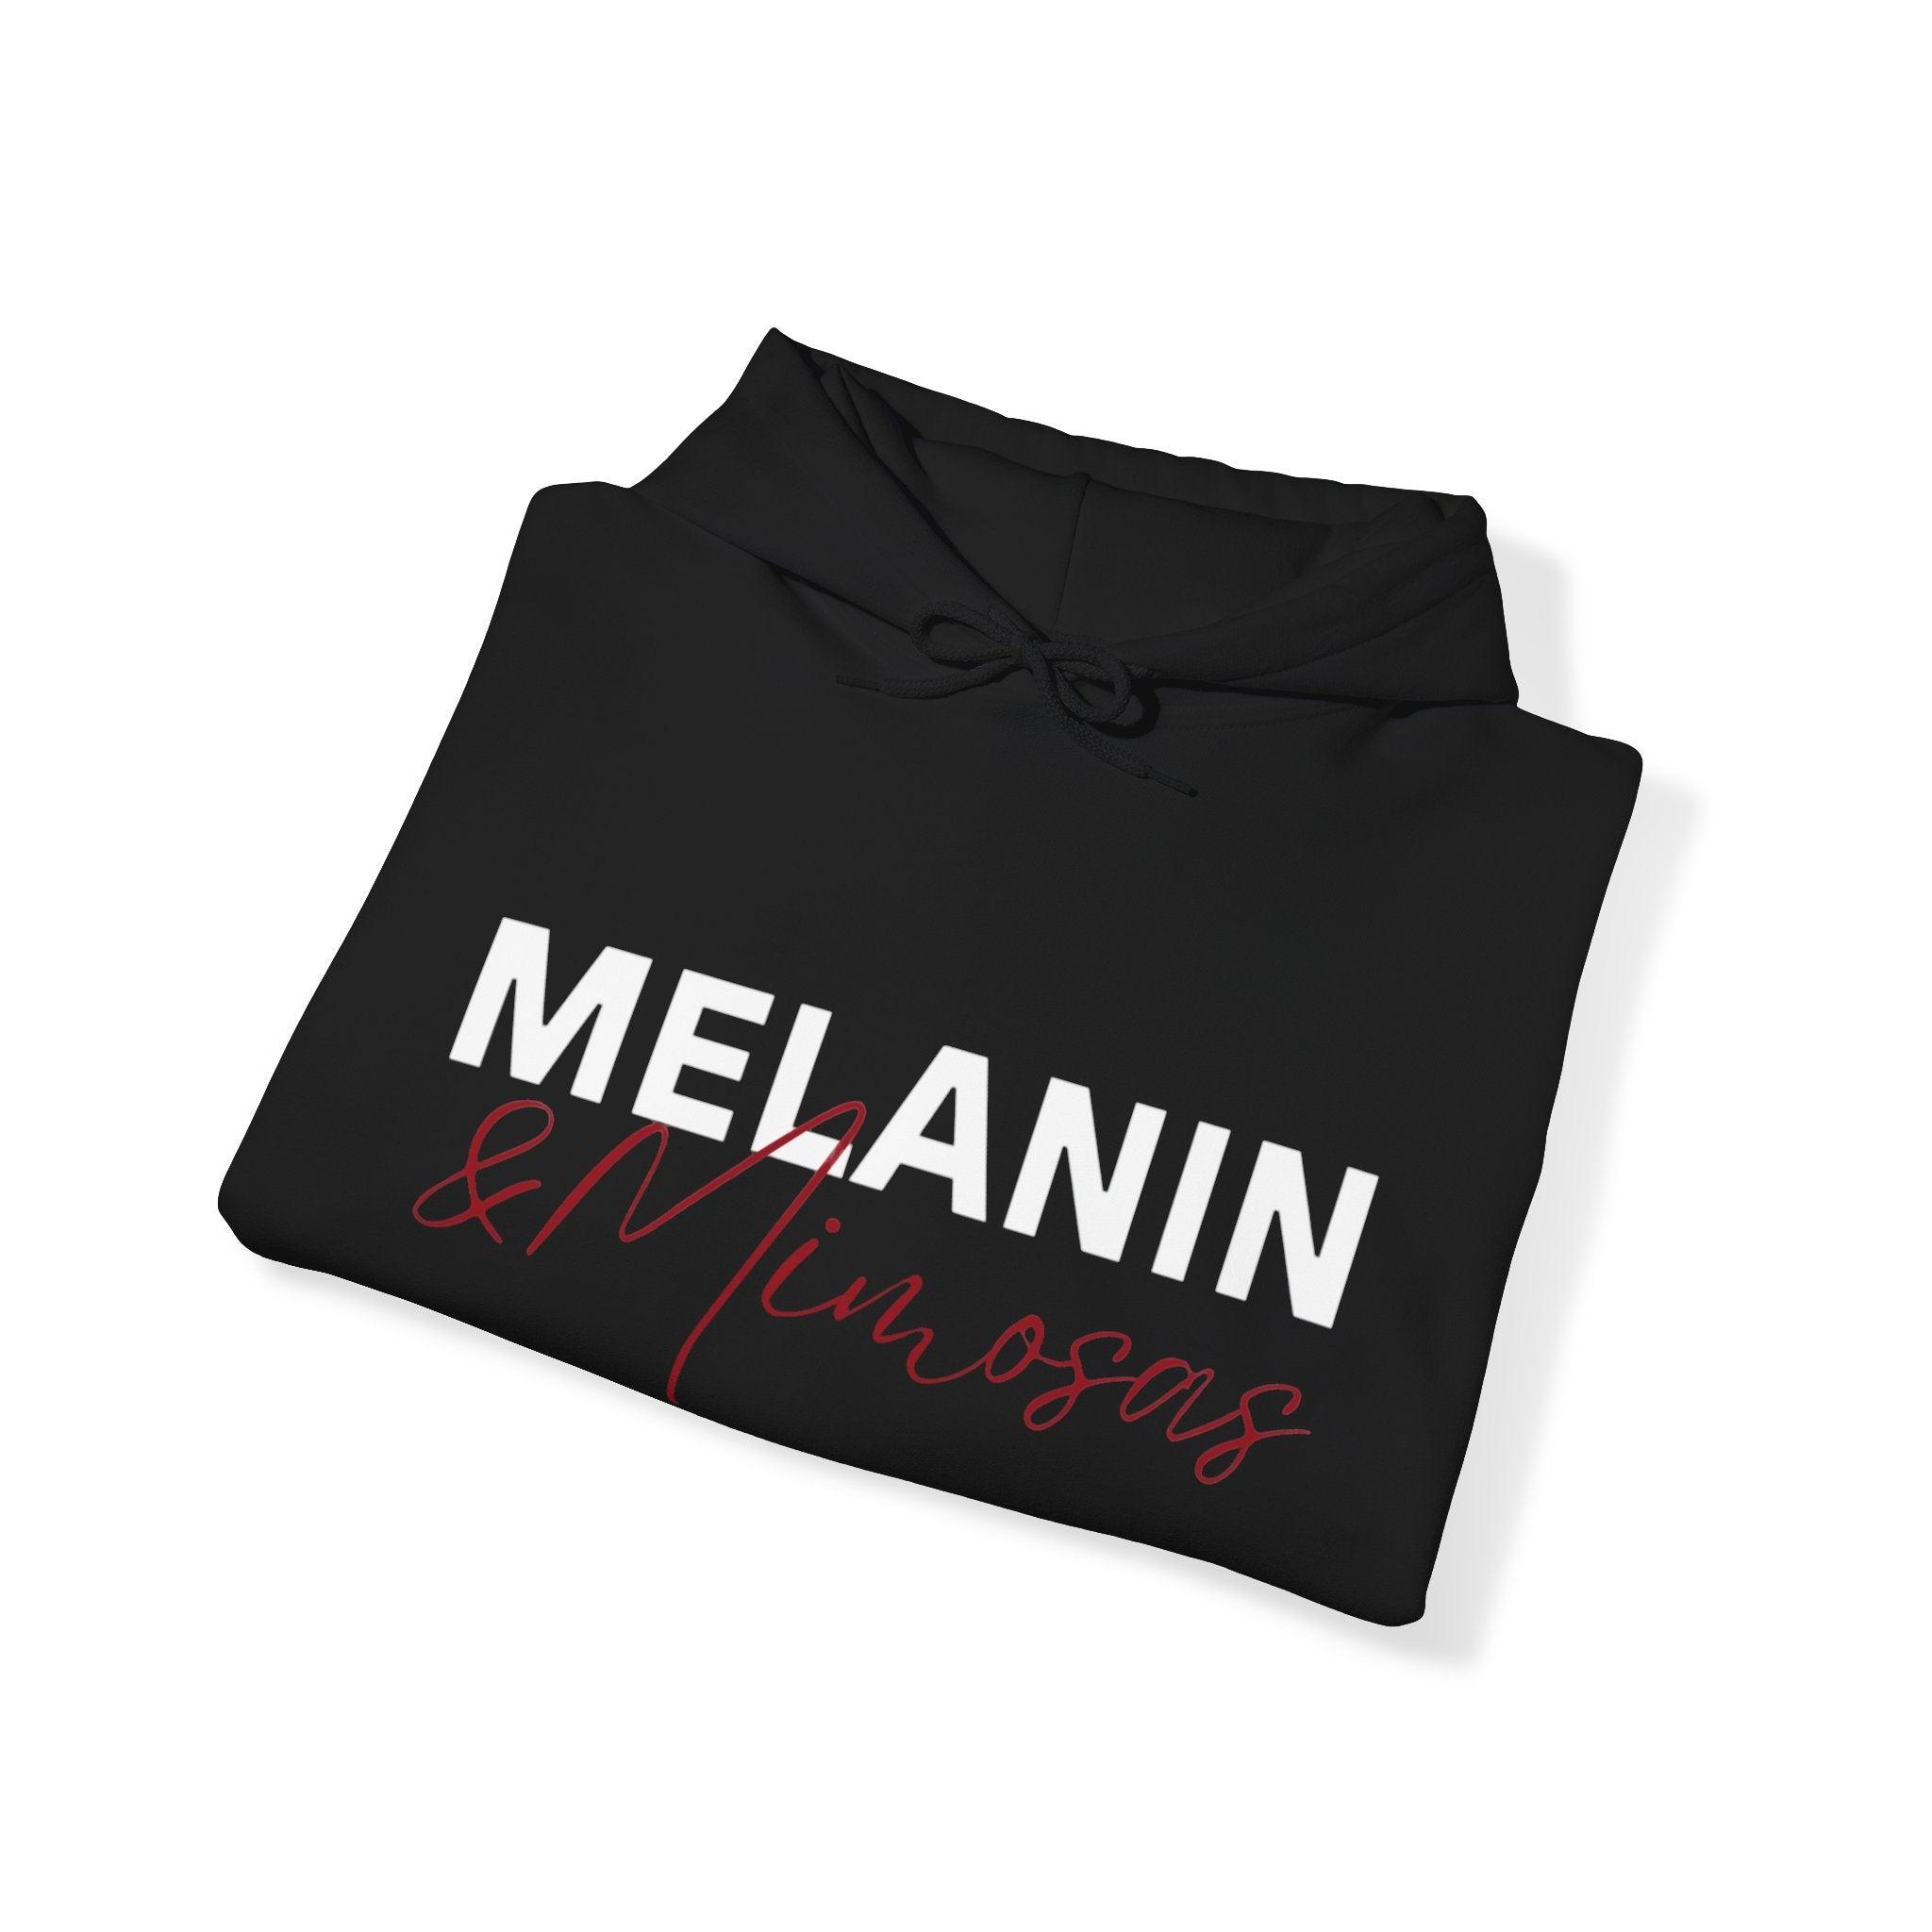 MELANIN & MIMOSAS - Heavy Hooded Sweatshirt